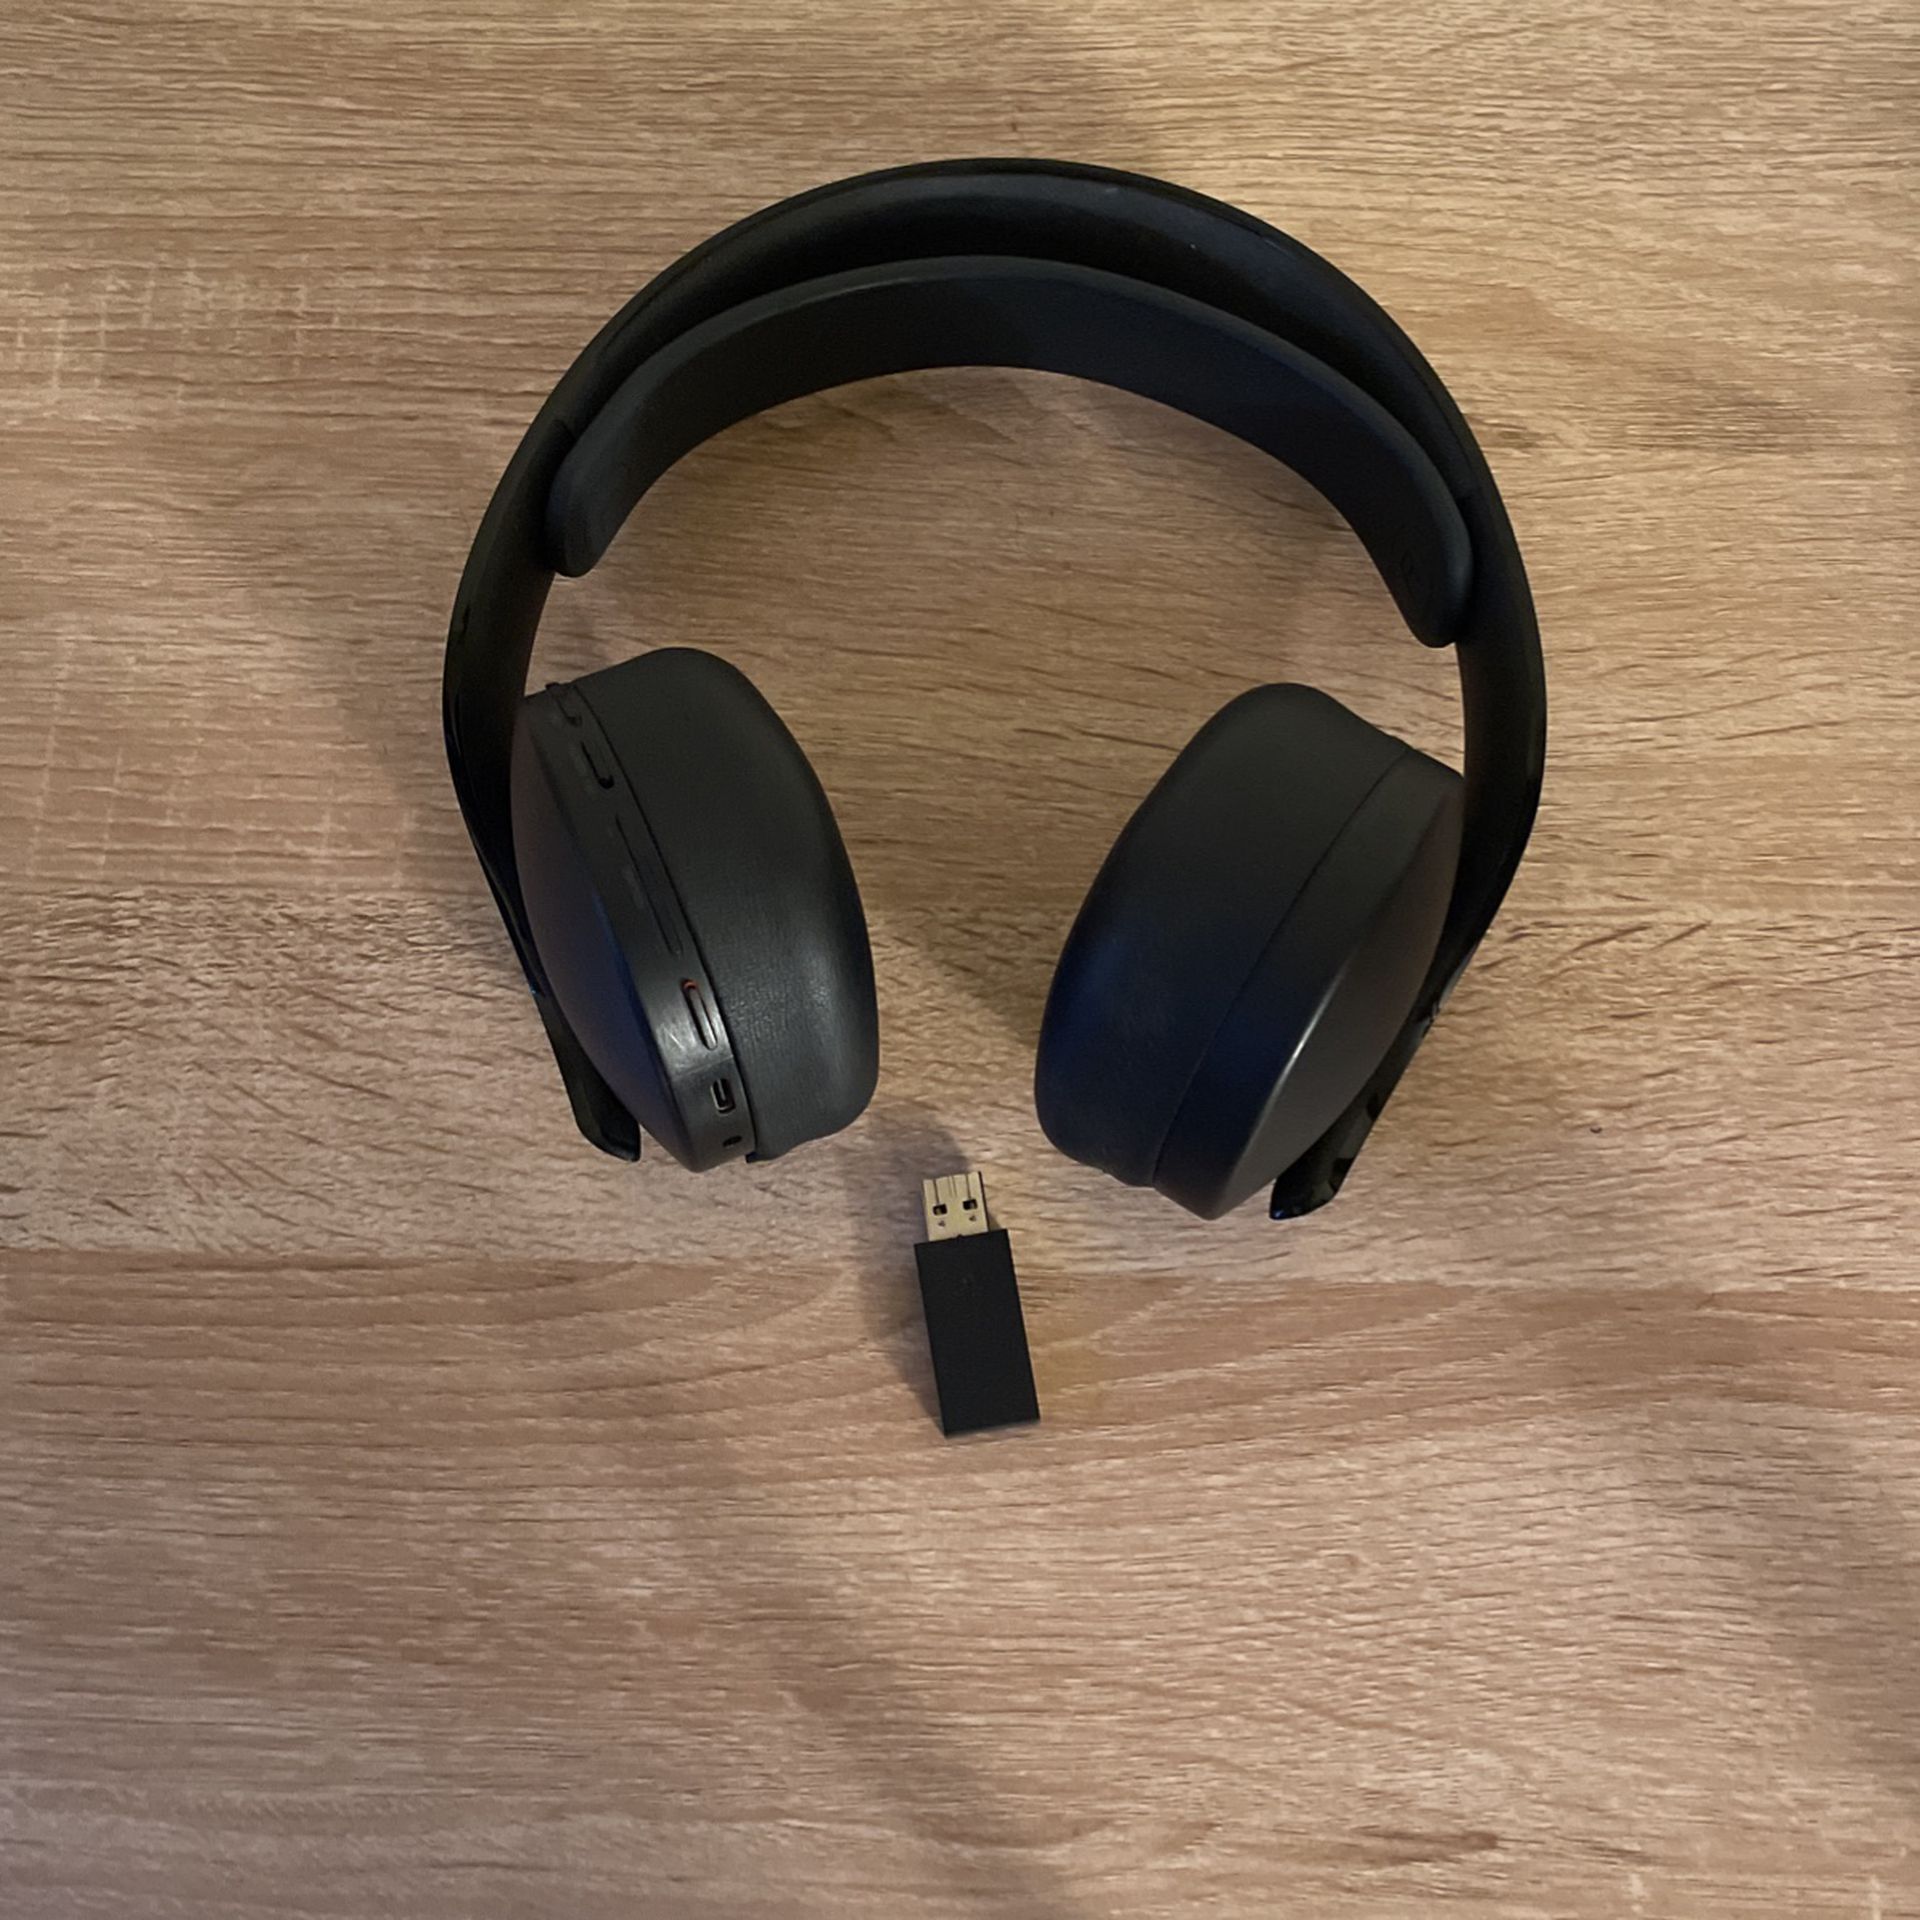 PS5 Headset “black”